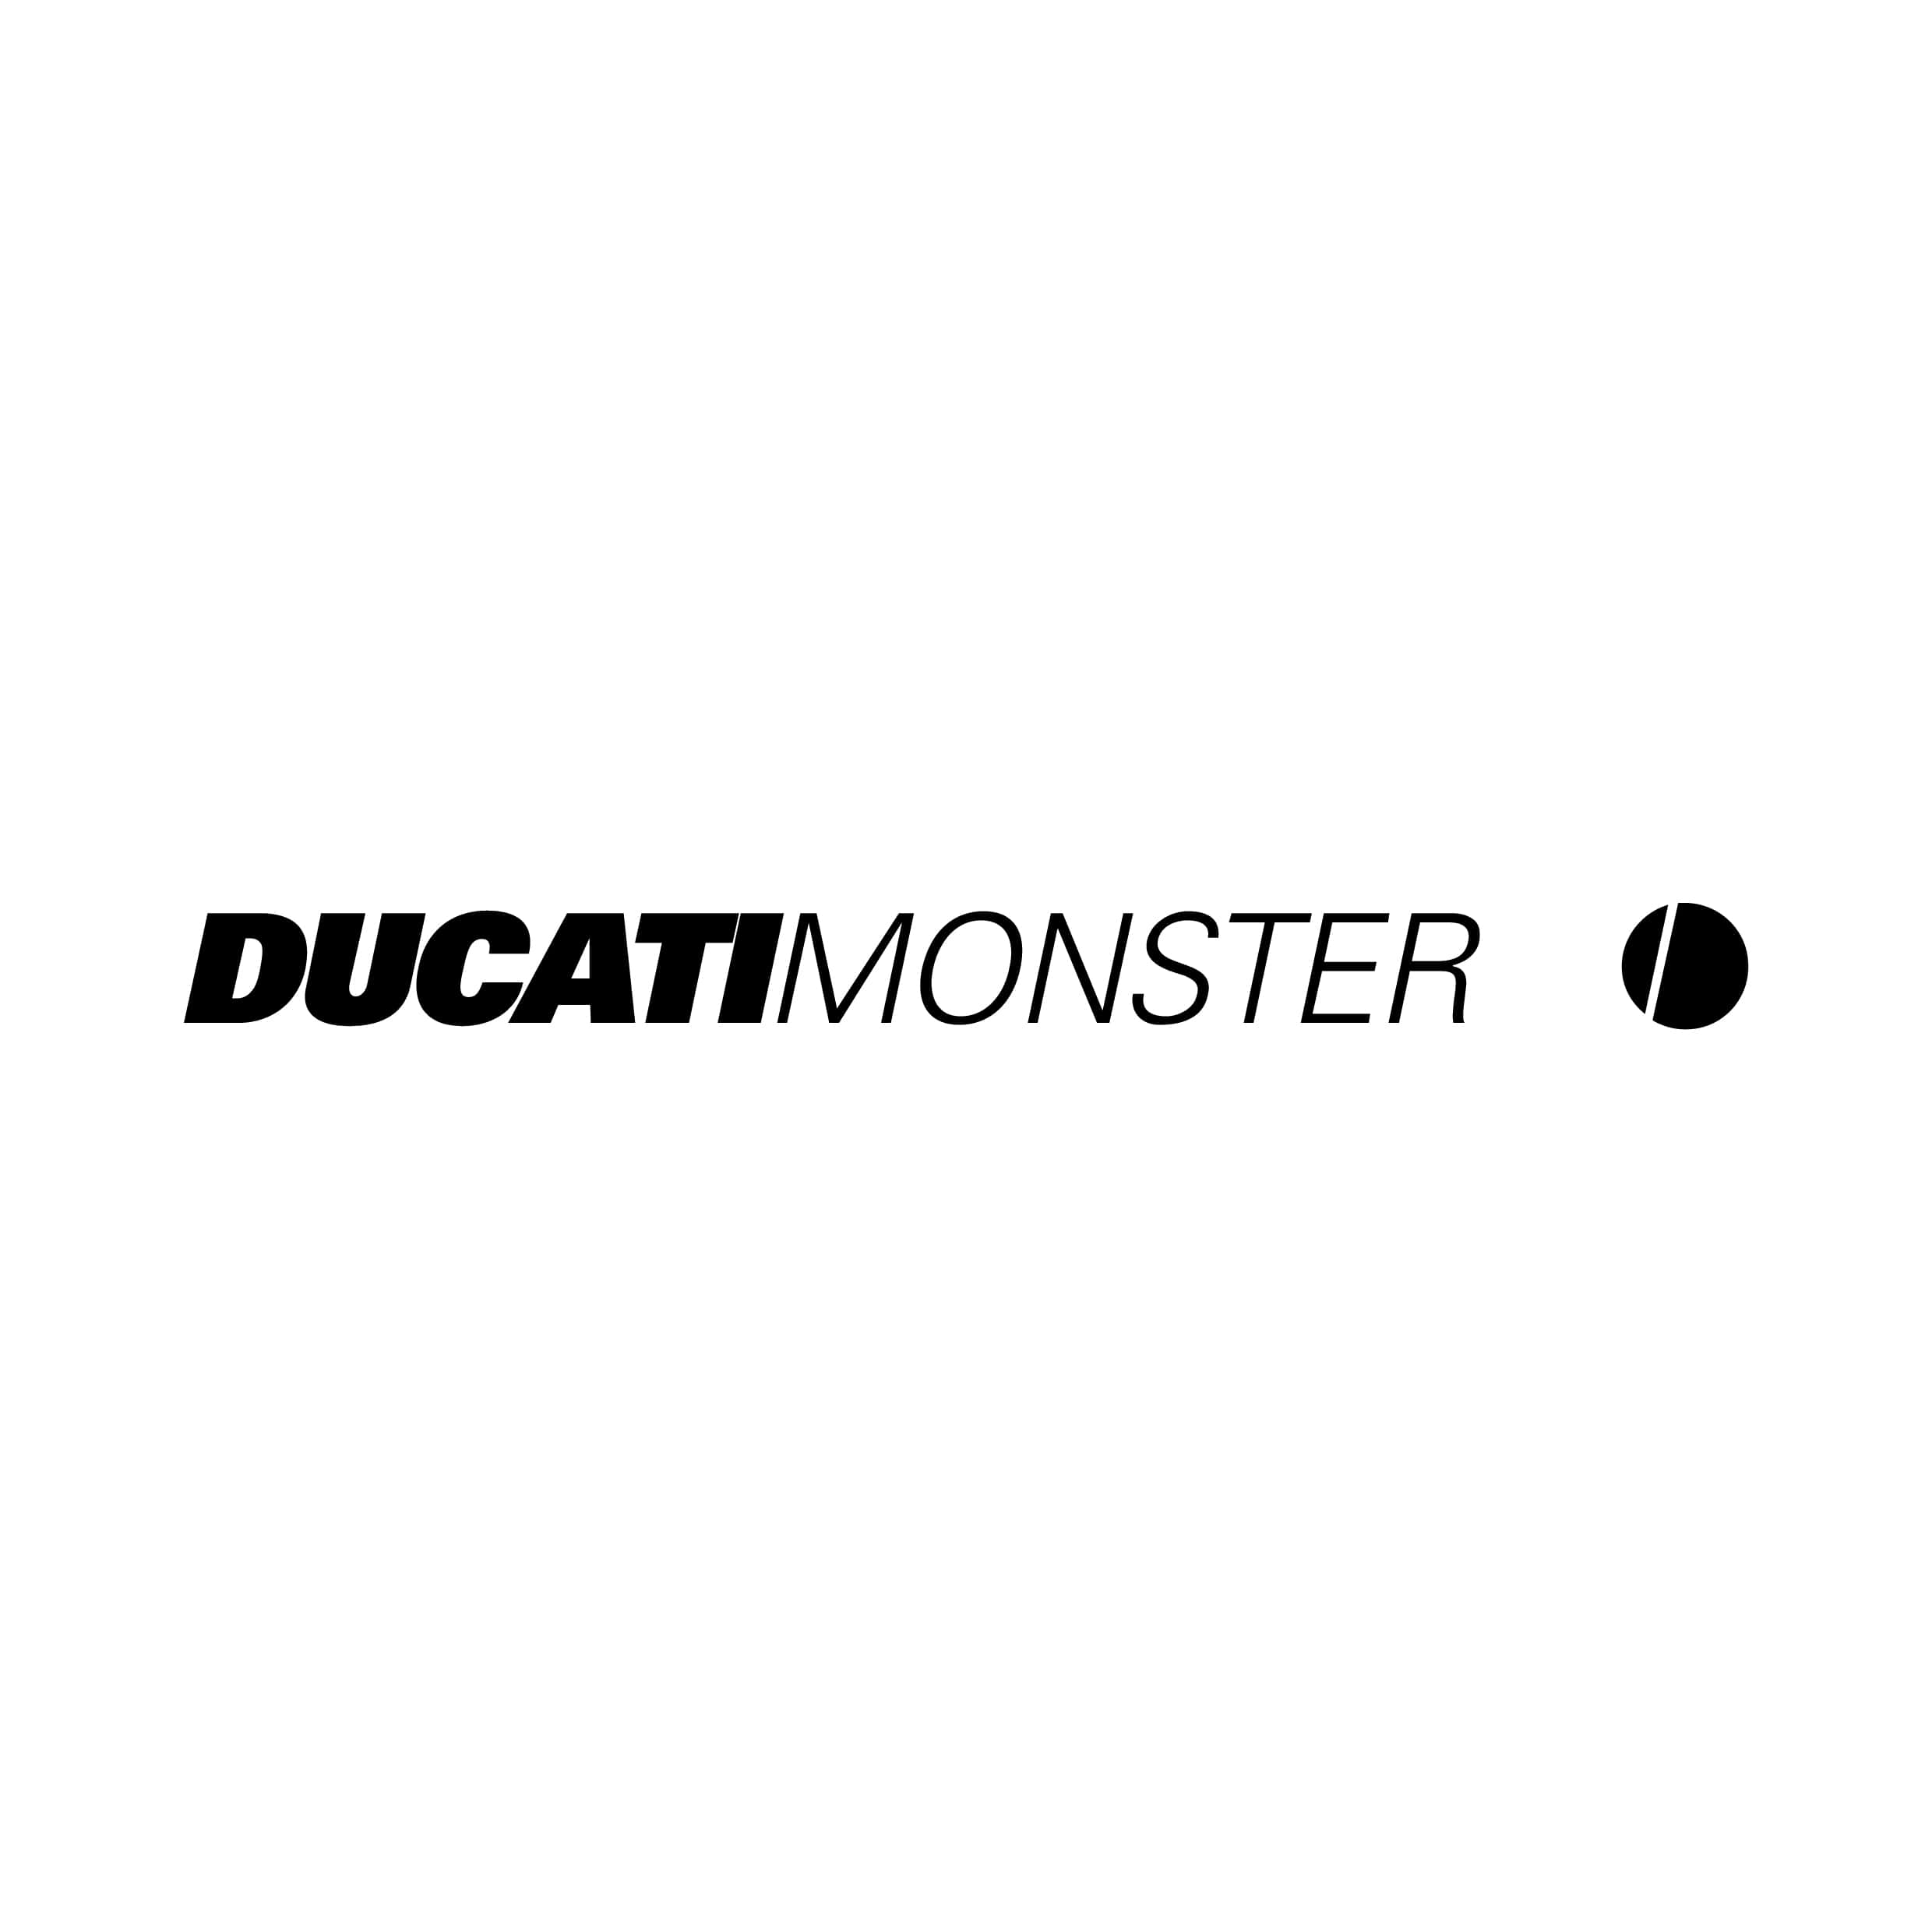 stickers-ducati-monster-ref6-autocollant-moto-sticker-deux-roue-autocollants-decals-sponsors-tuning-sport-logo-bike-scooter-min